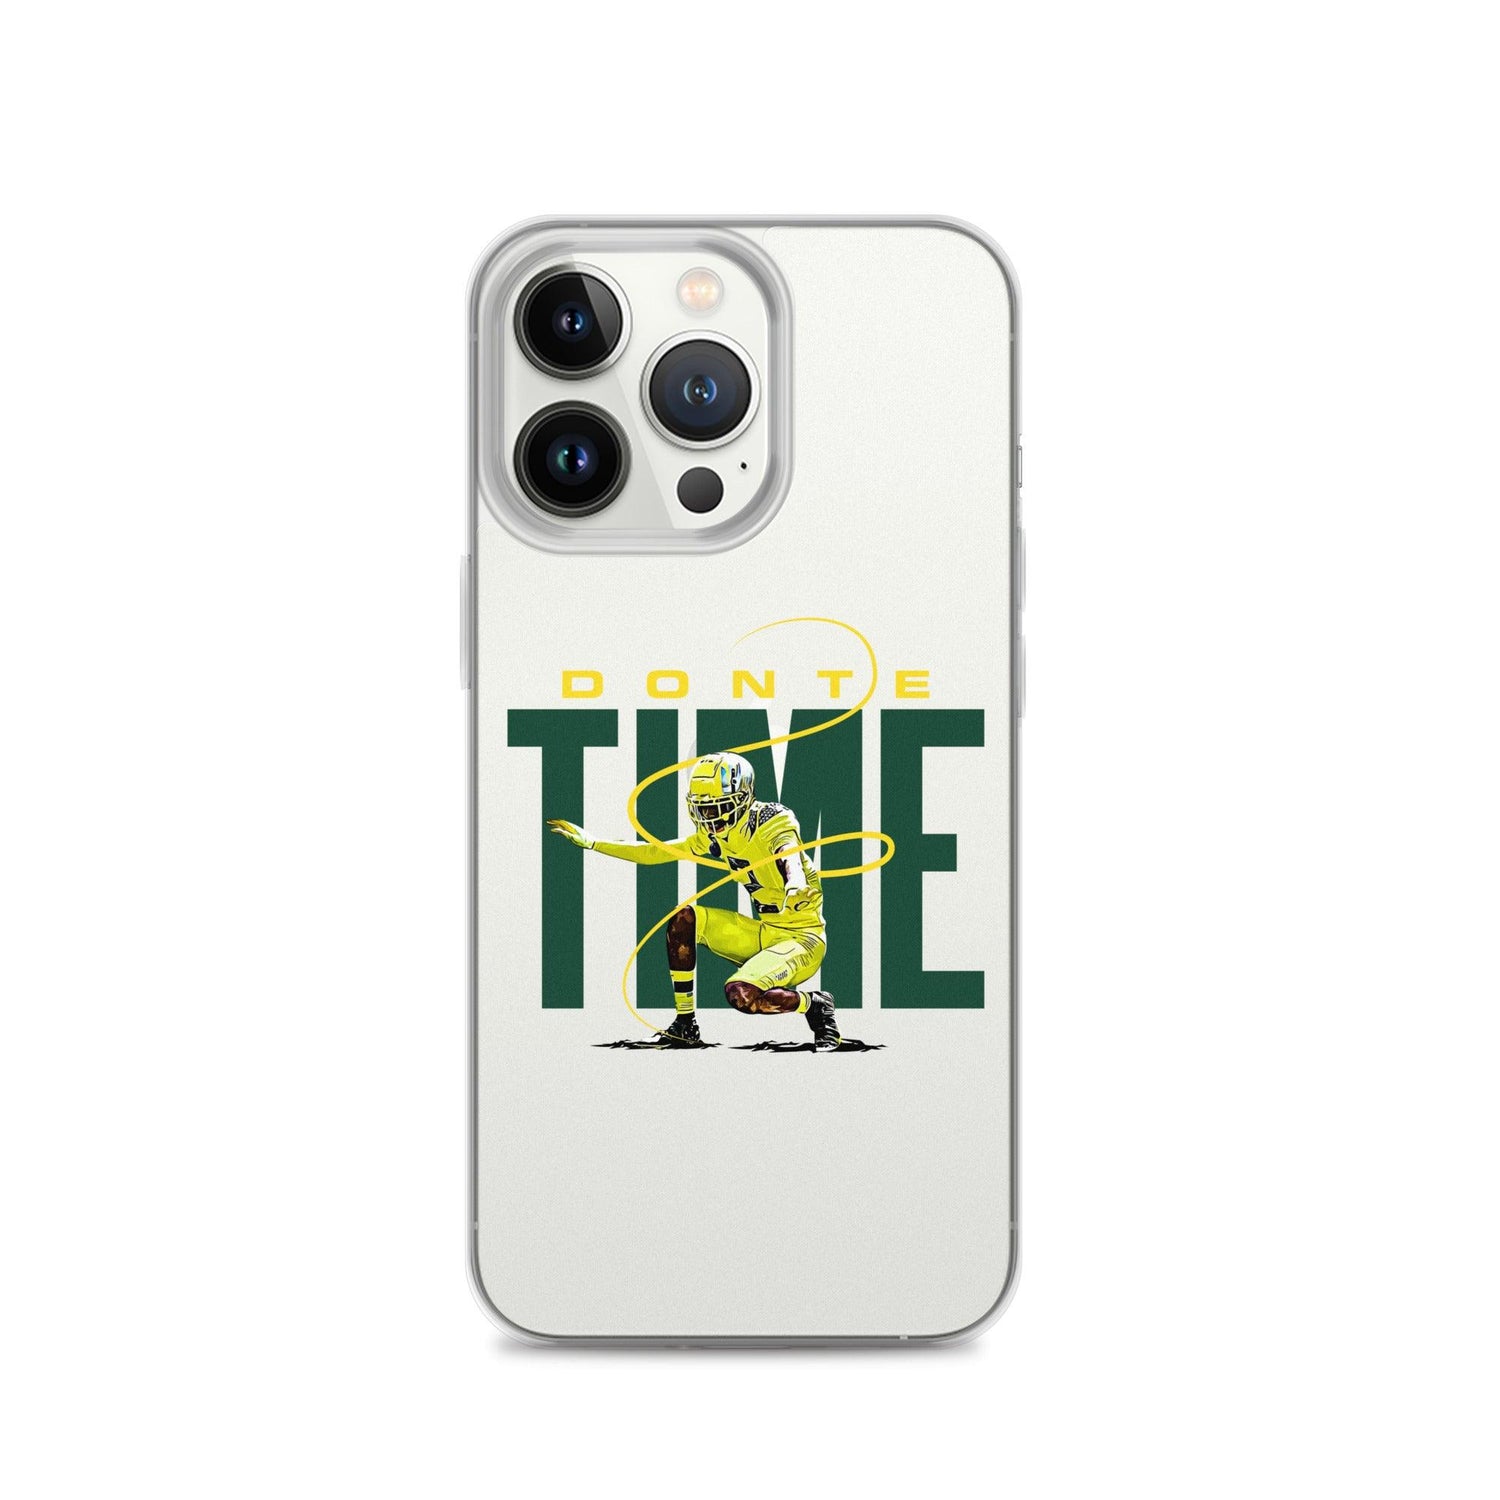 Donte Thornton Jr. “GameTime” iPhone Case - Fan Arch